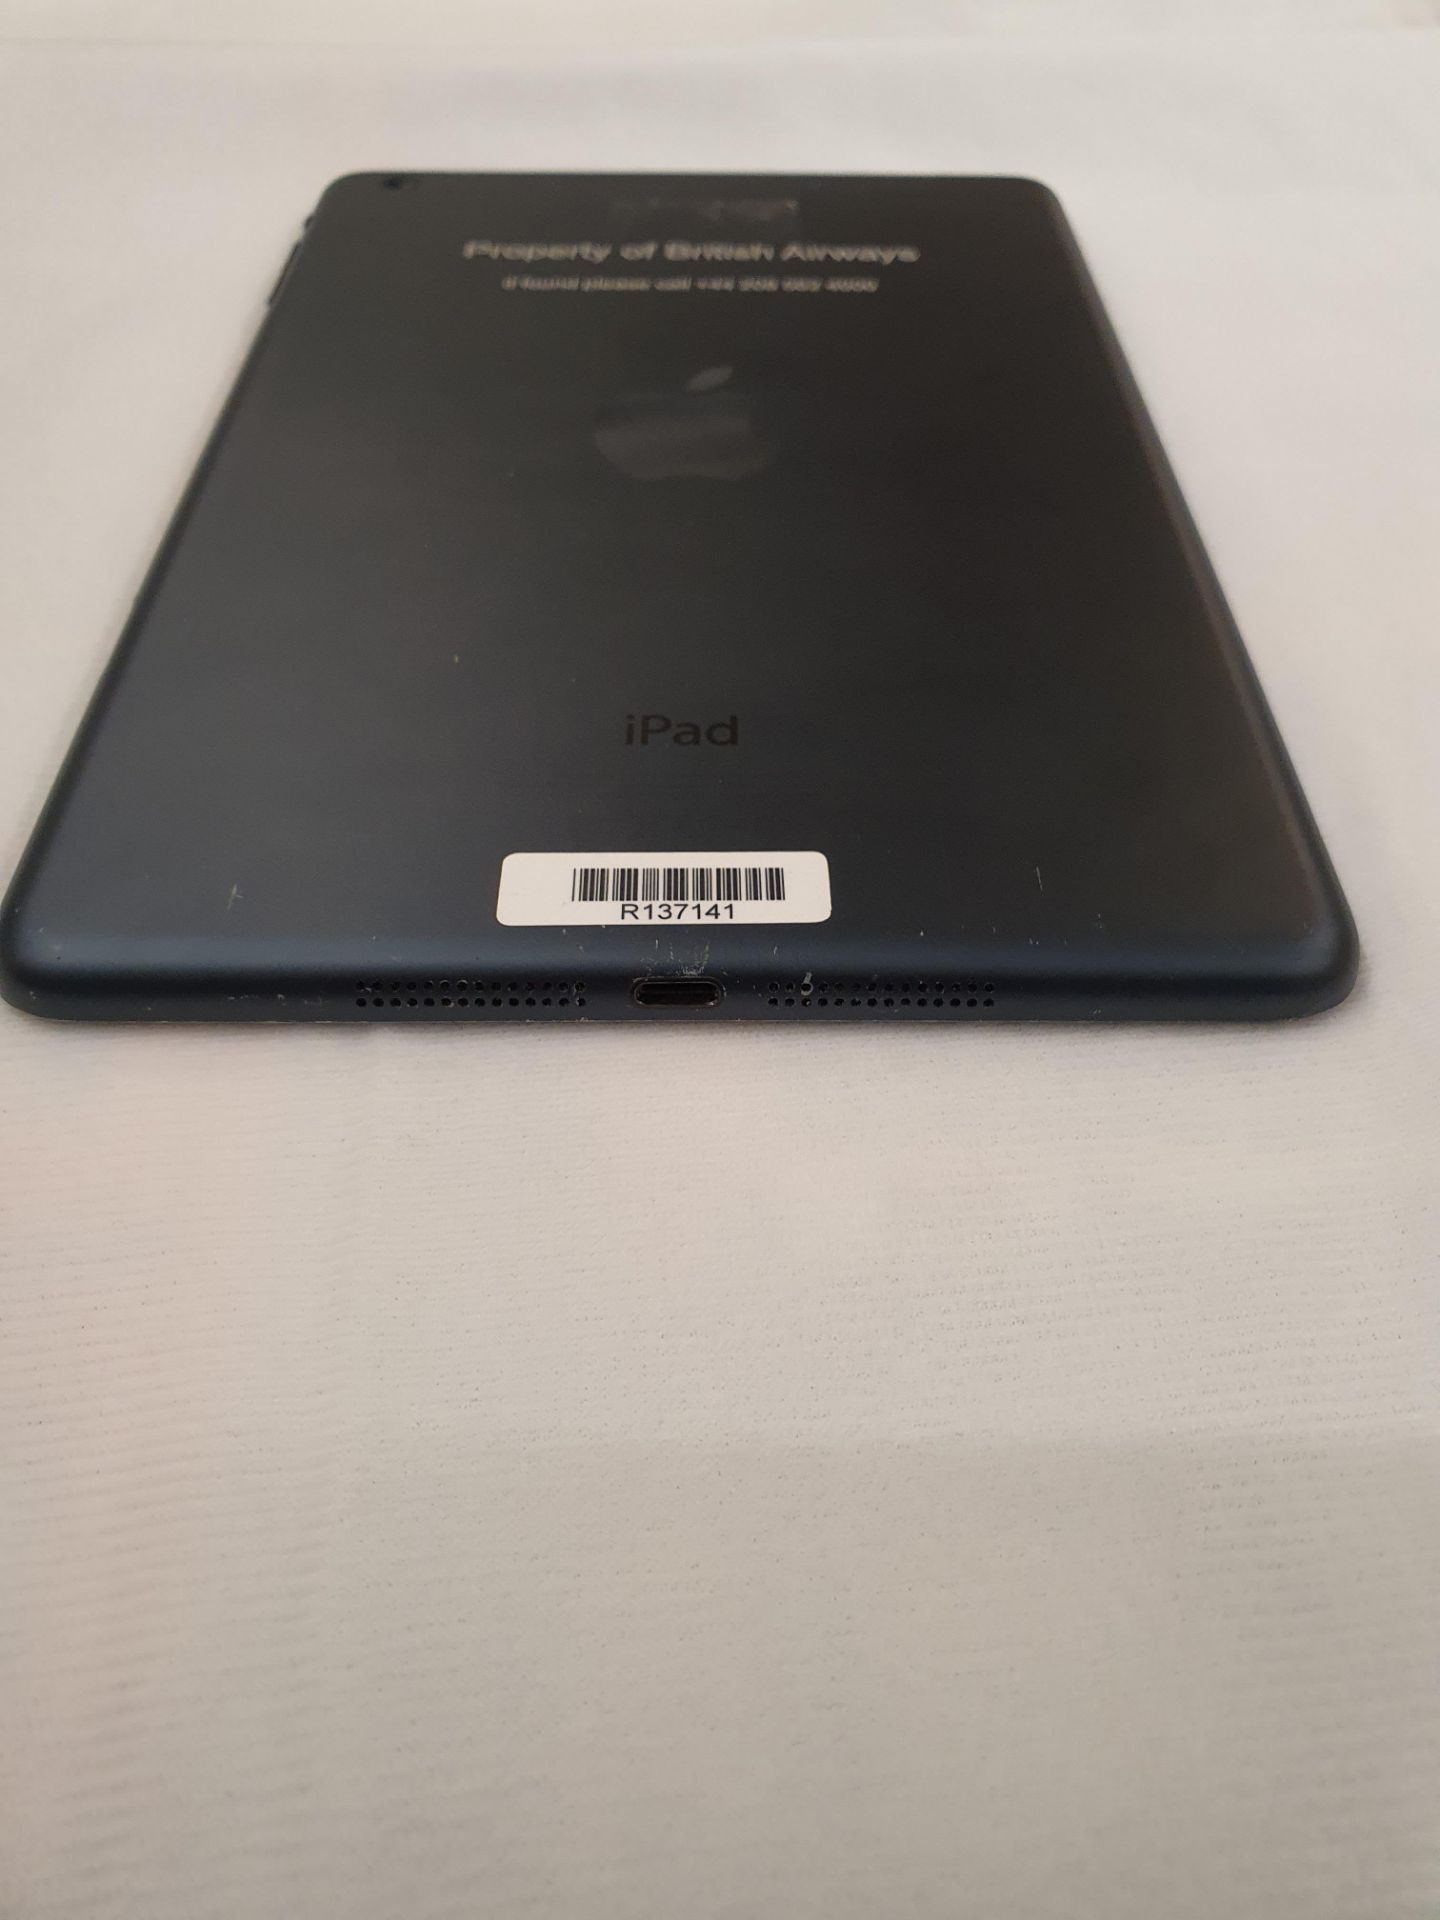 V Grade B Apple iPad Mini A1455 - Ex Lease (Has British Airways Engraving/Etching) - 16GB - Unit - Image 7 of 7